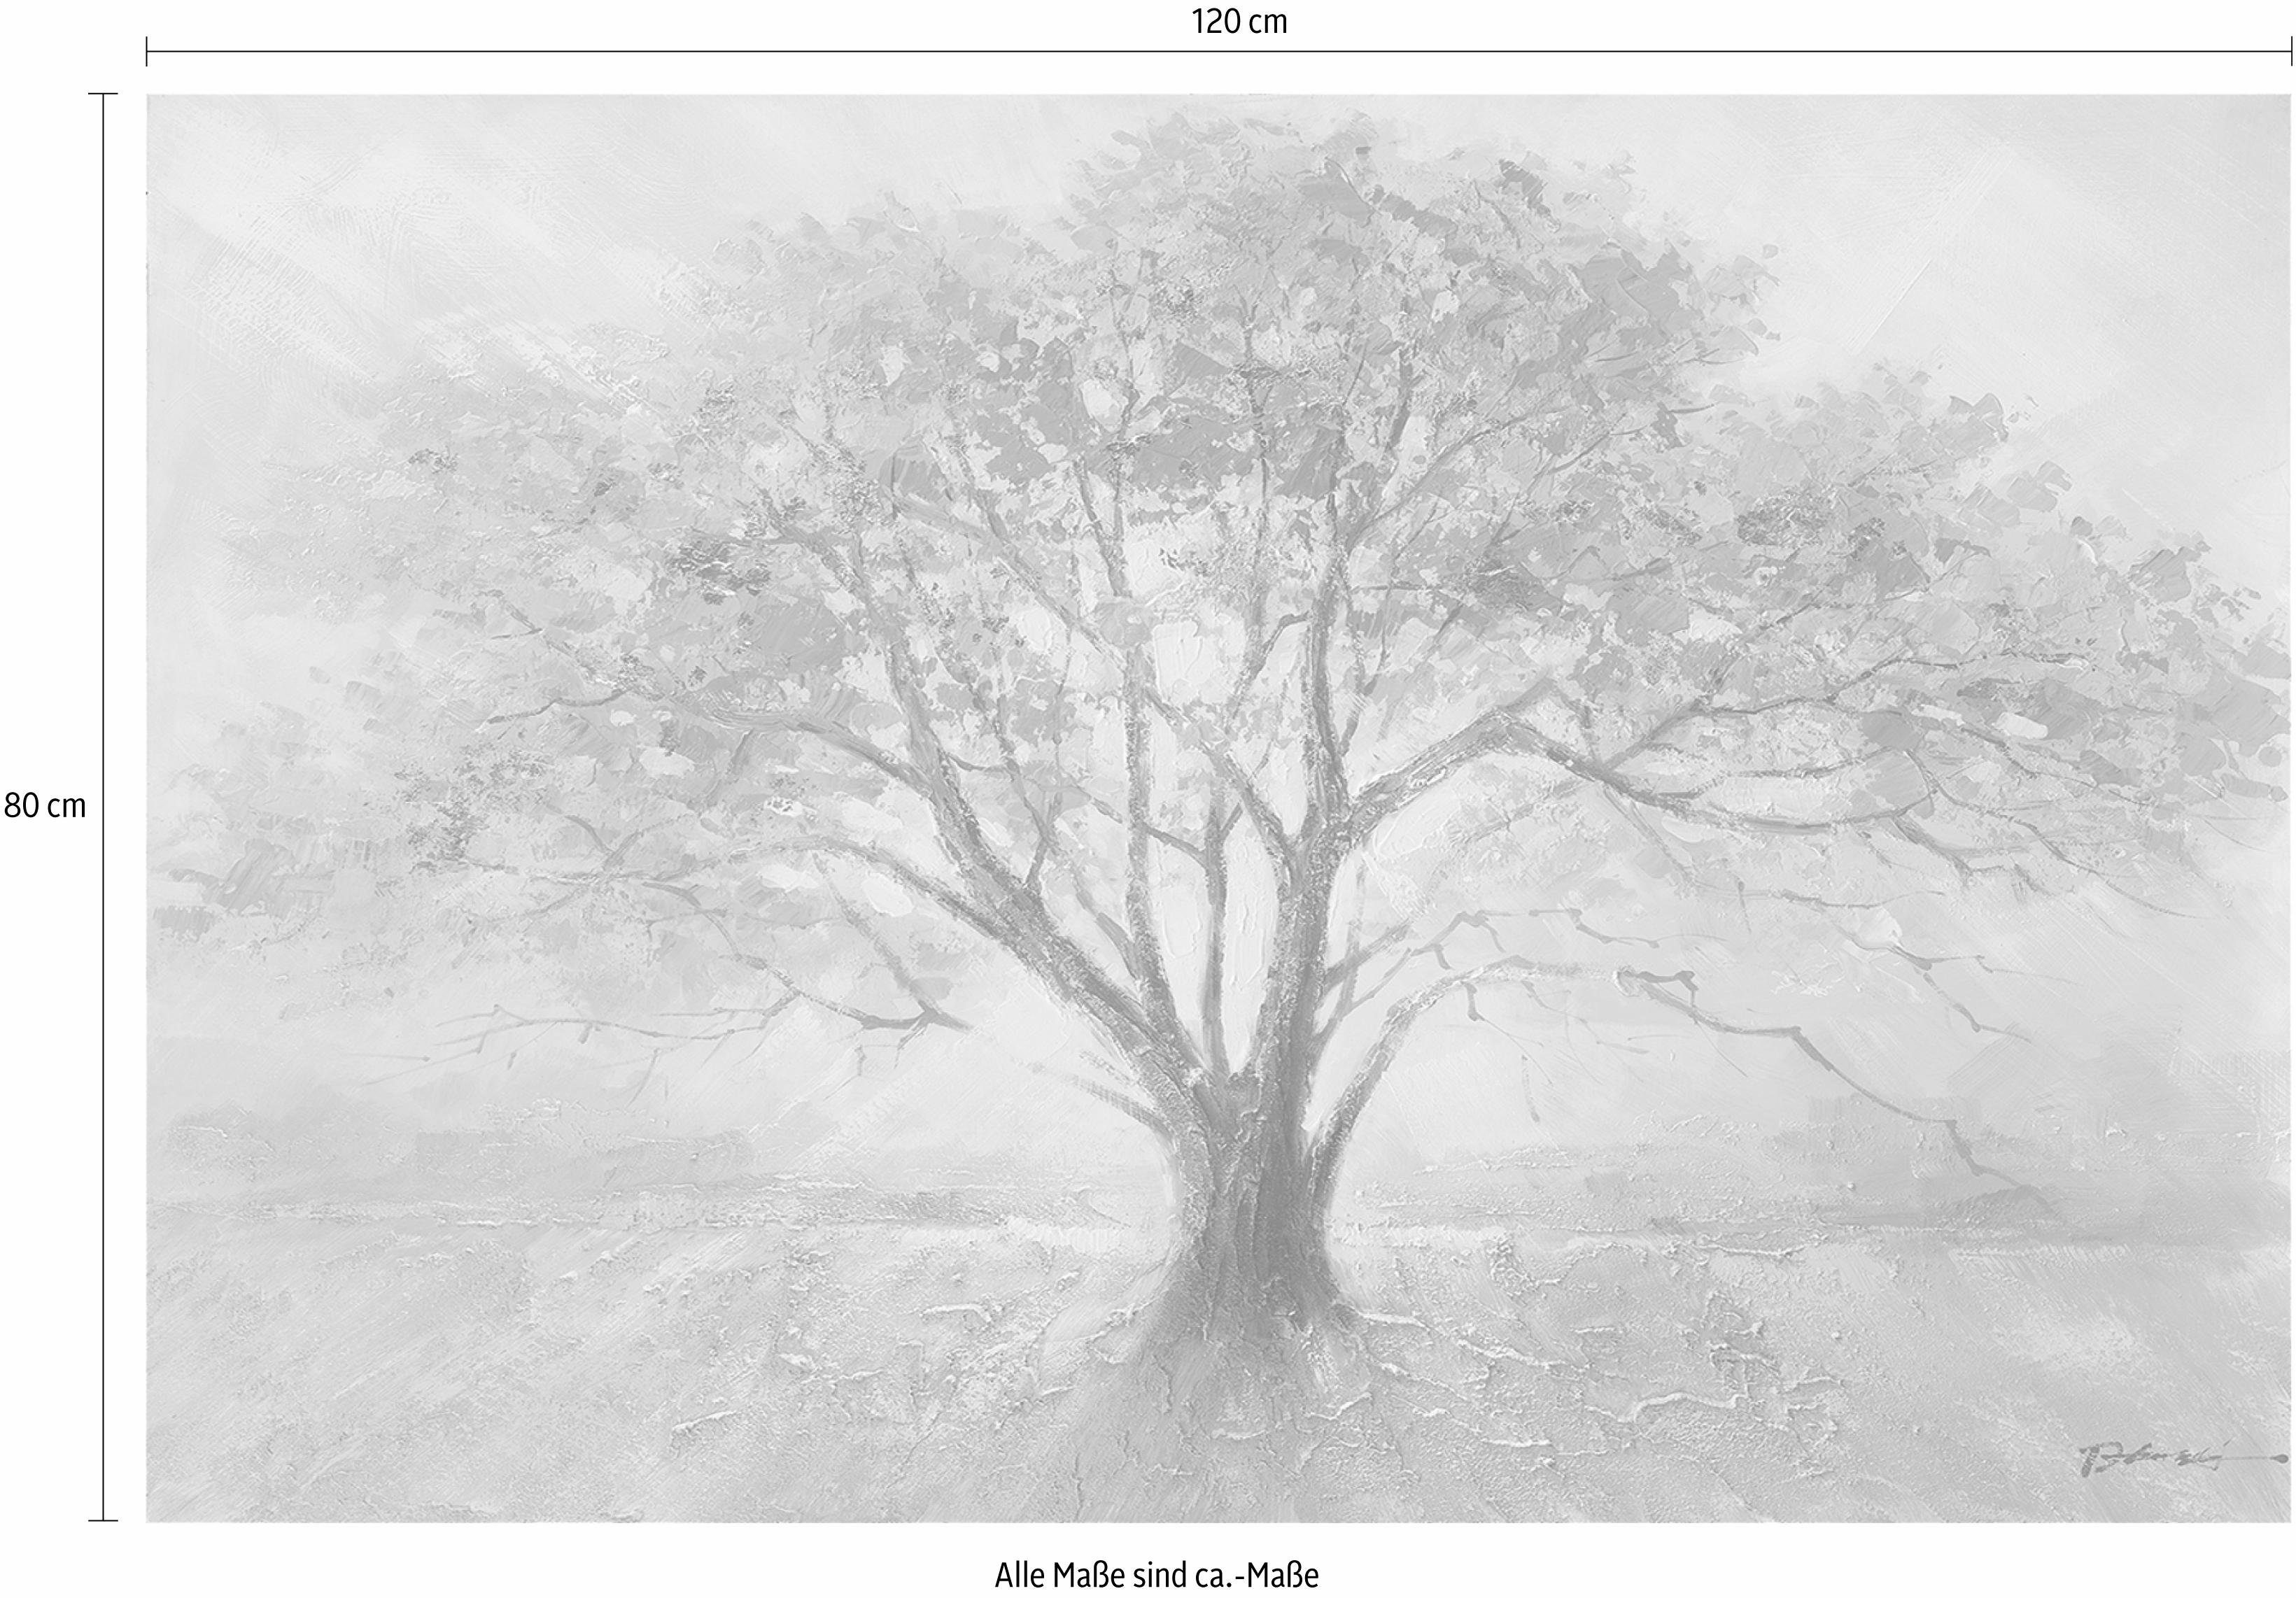 Home affaire 120/80 I, Gemälde Baum, Baumbilder, Tree cm Natur